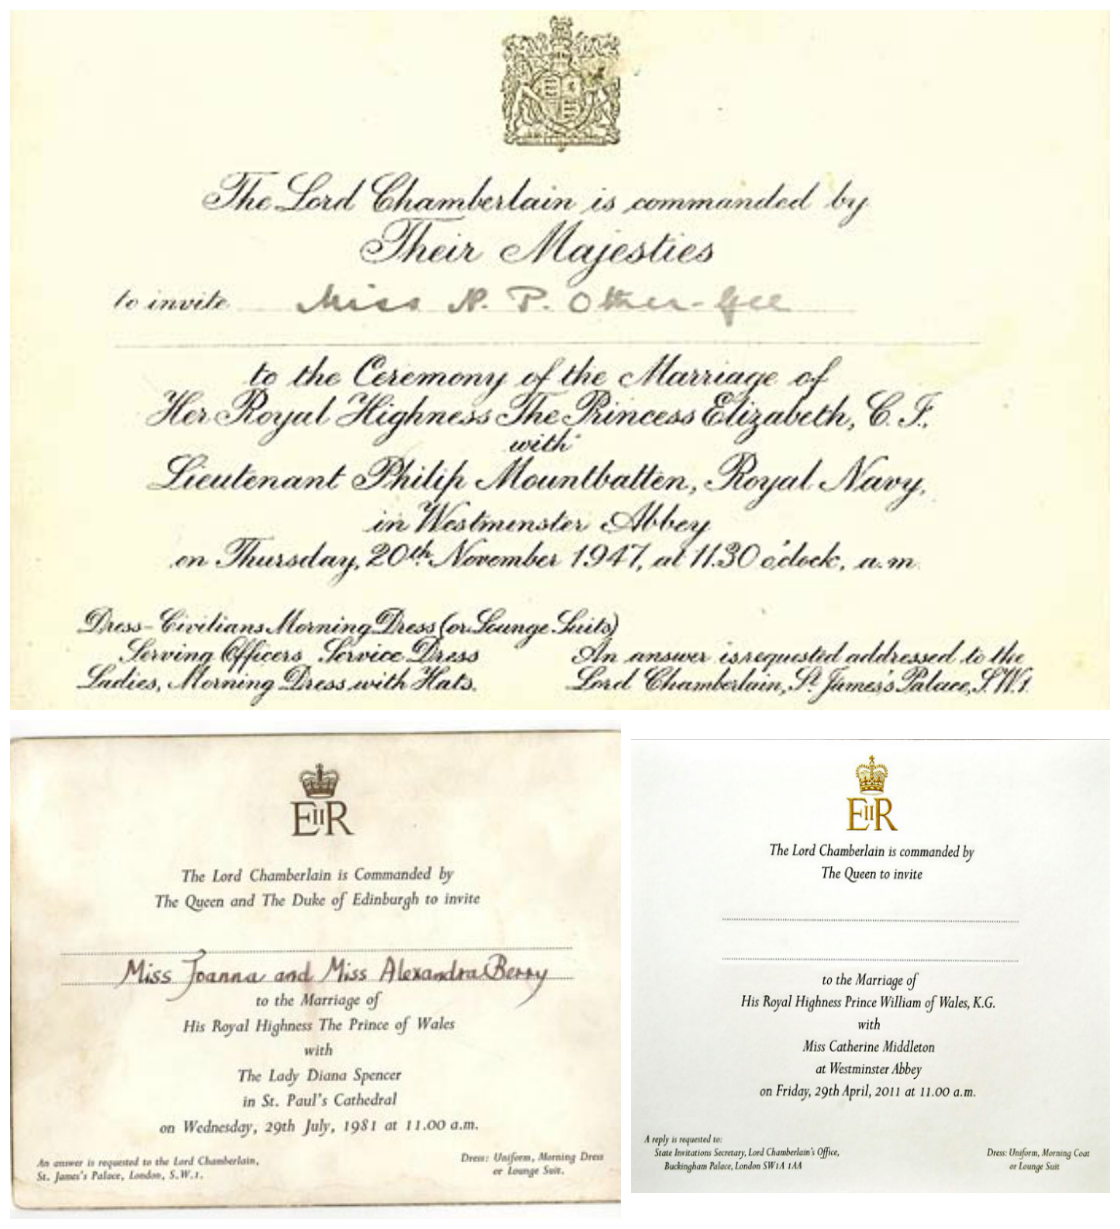 Royal Wedding Invitations